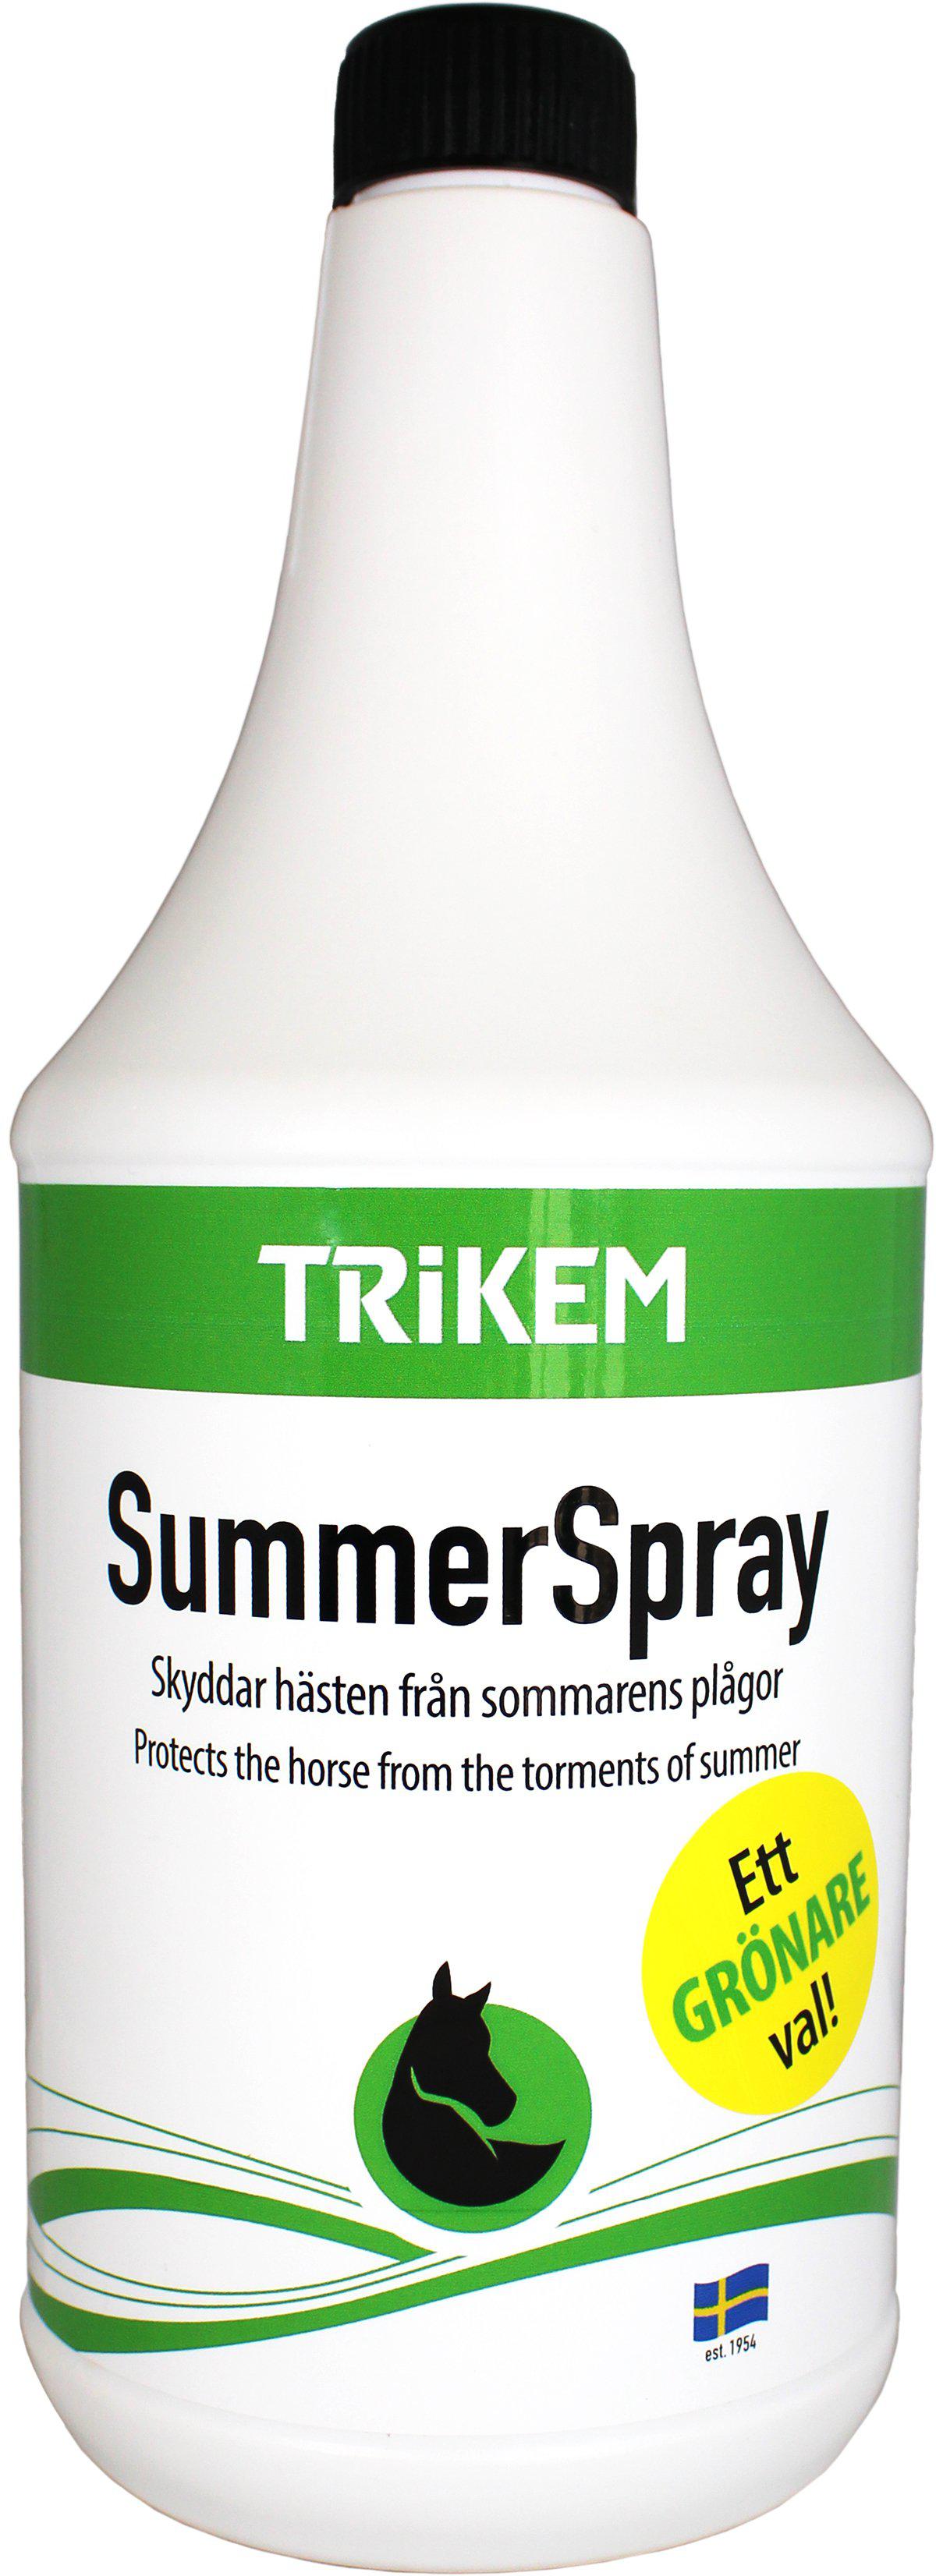 TRIKEM - Summer Spray 1L - (822.7020) - Kjæledyr og utstyr